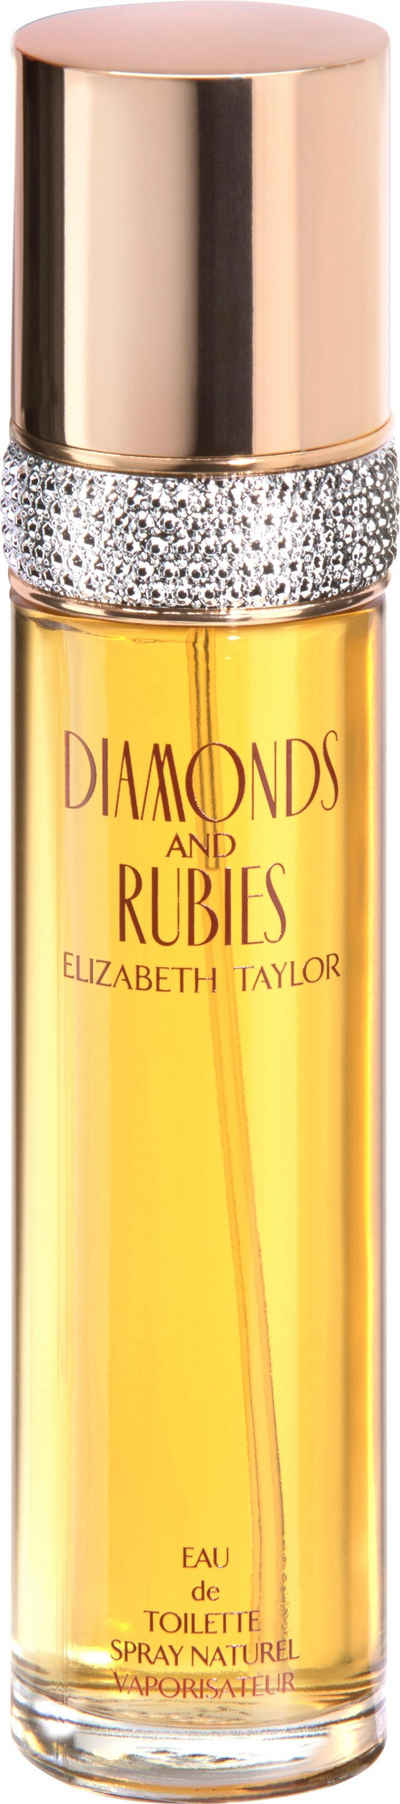 Elizabeth Taylor Eau de Toilette Diamonds & Rubies